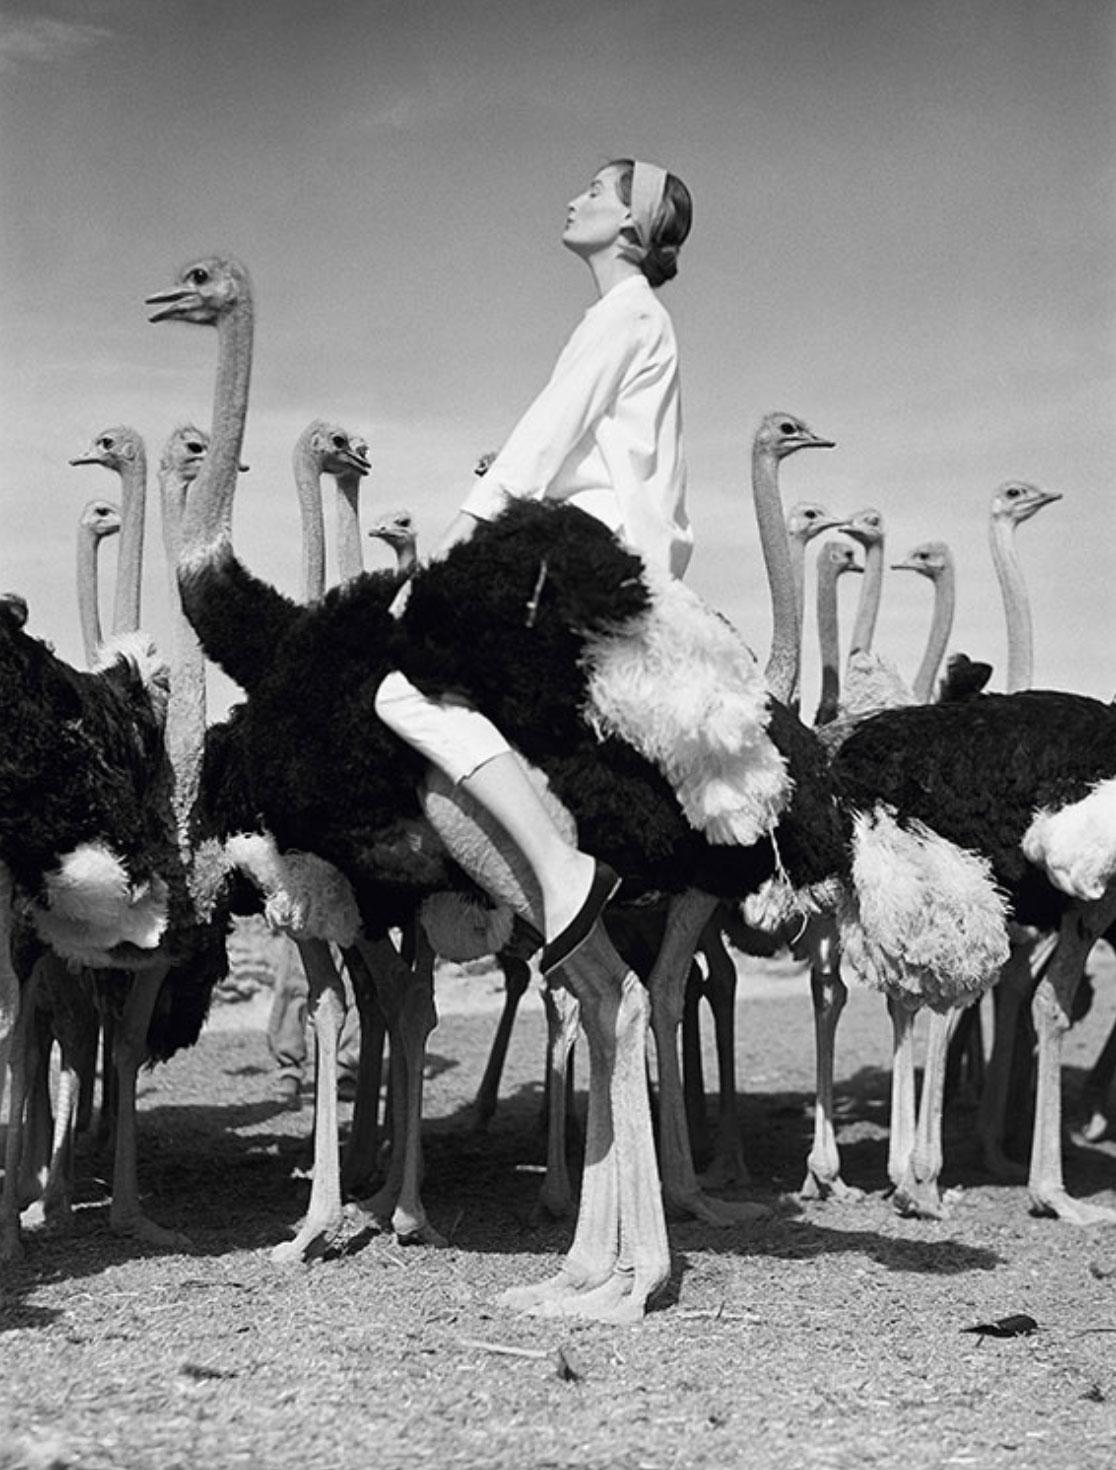 Norman Parkinson Portrait Photograph - Wenda and Ostriches